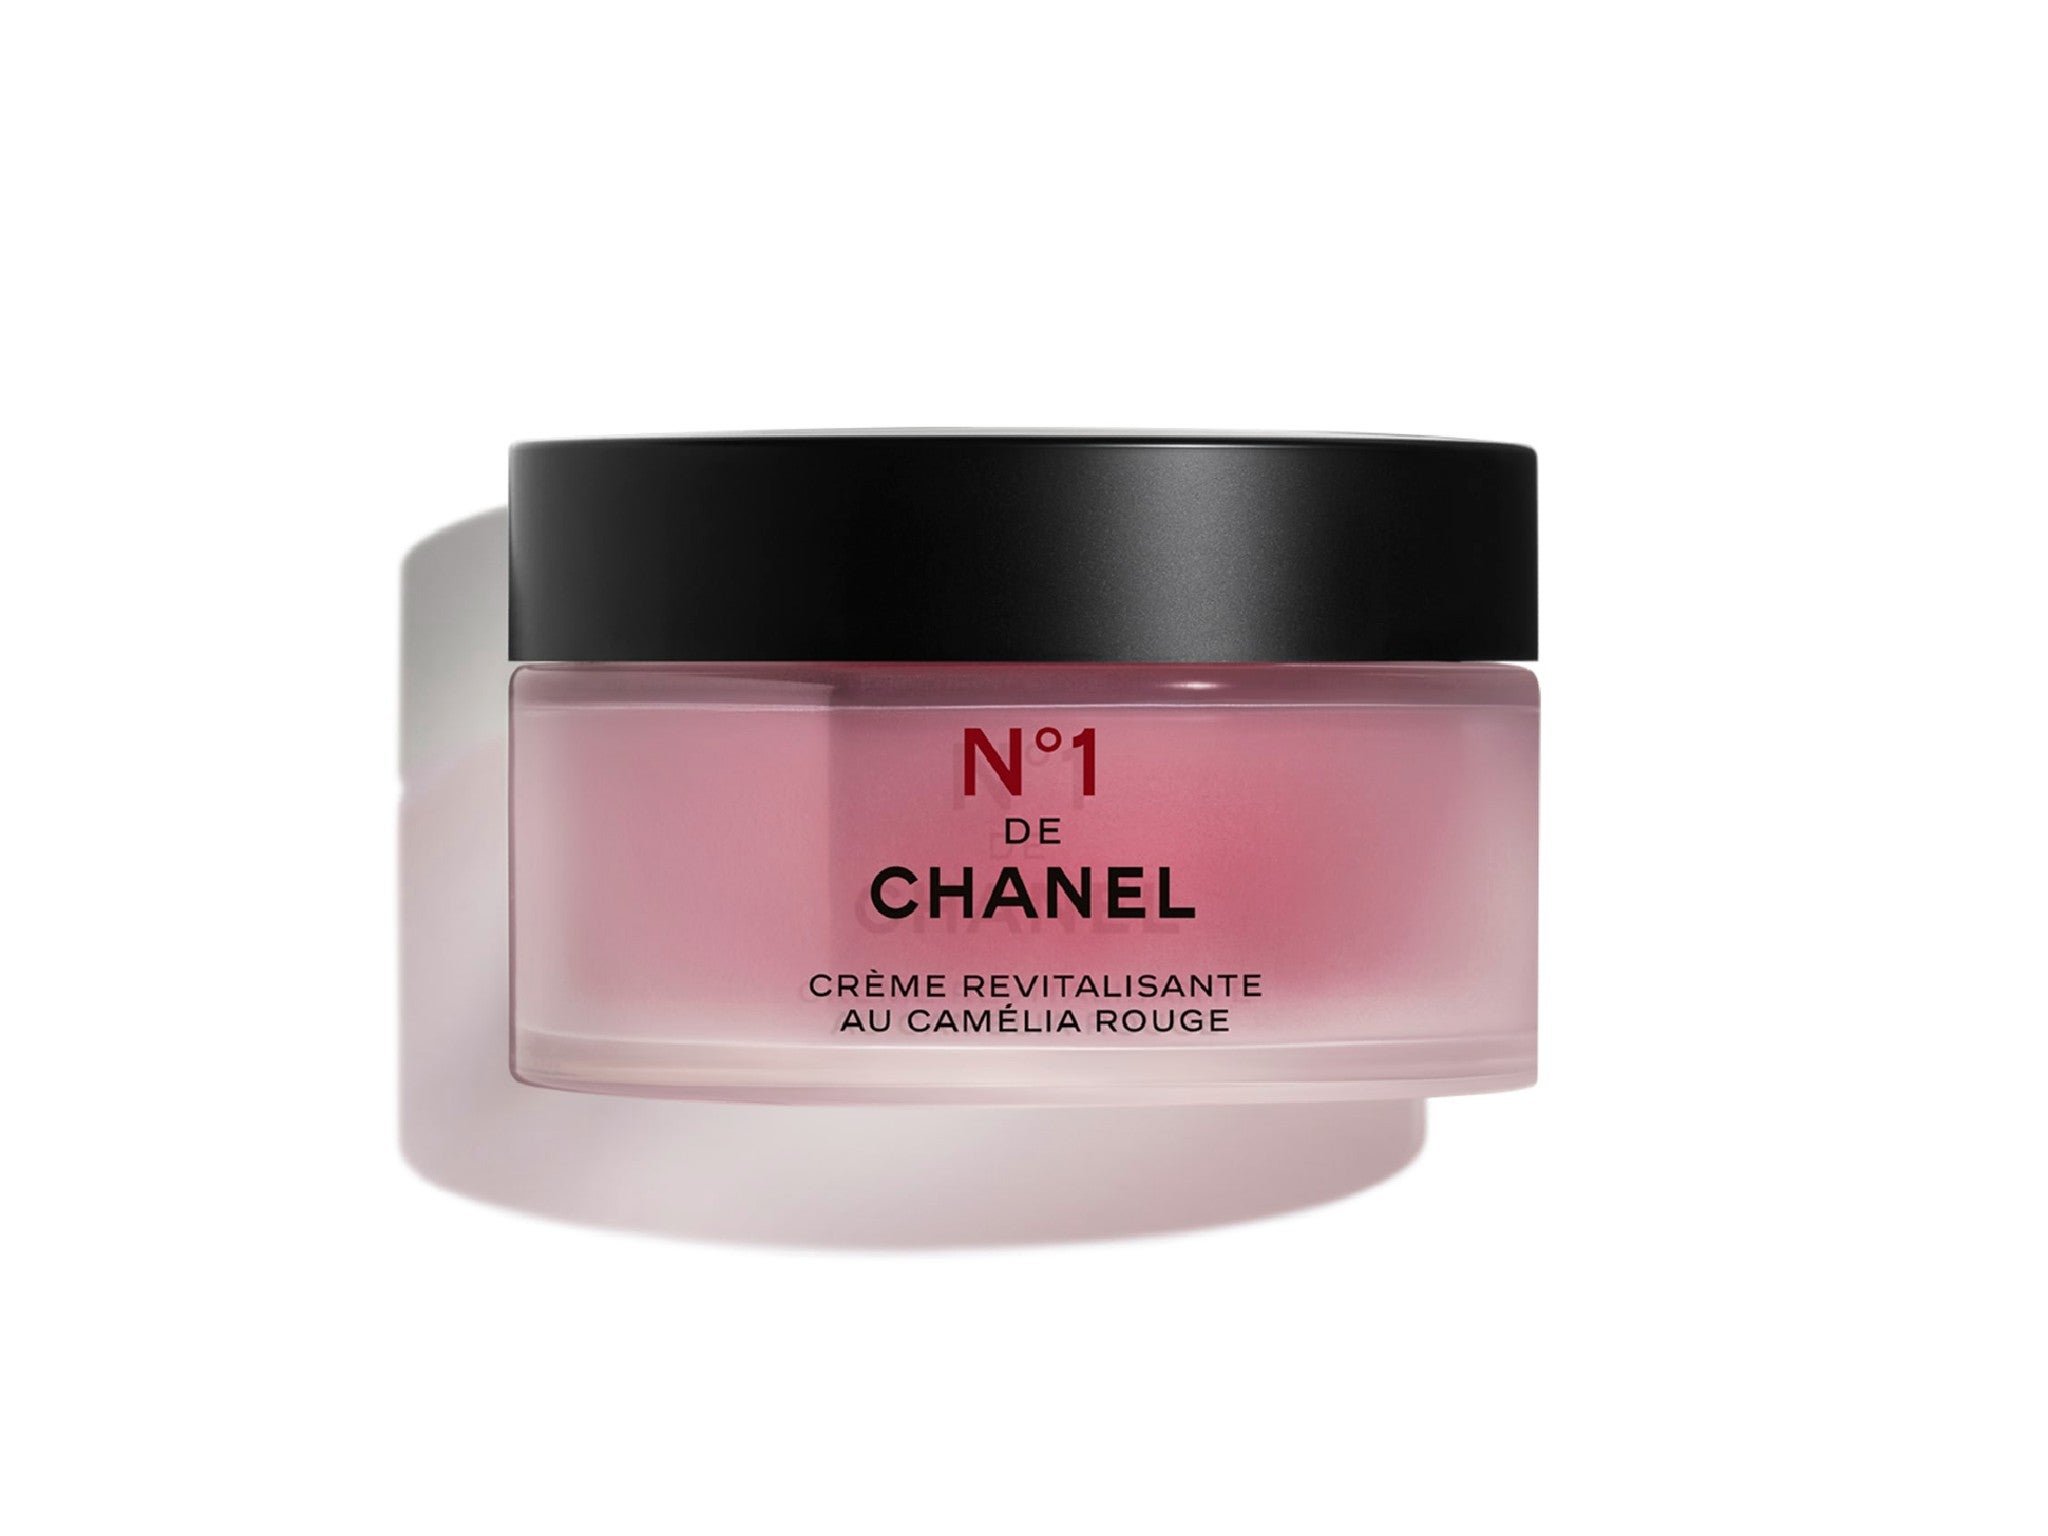  Chanel N°1 red camellia revitalising cream indybest.jpg